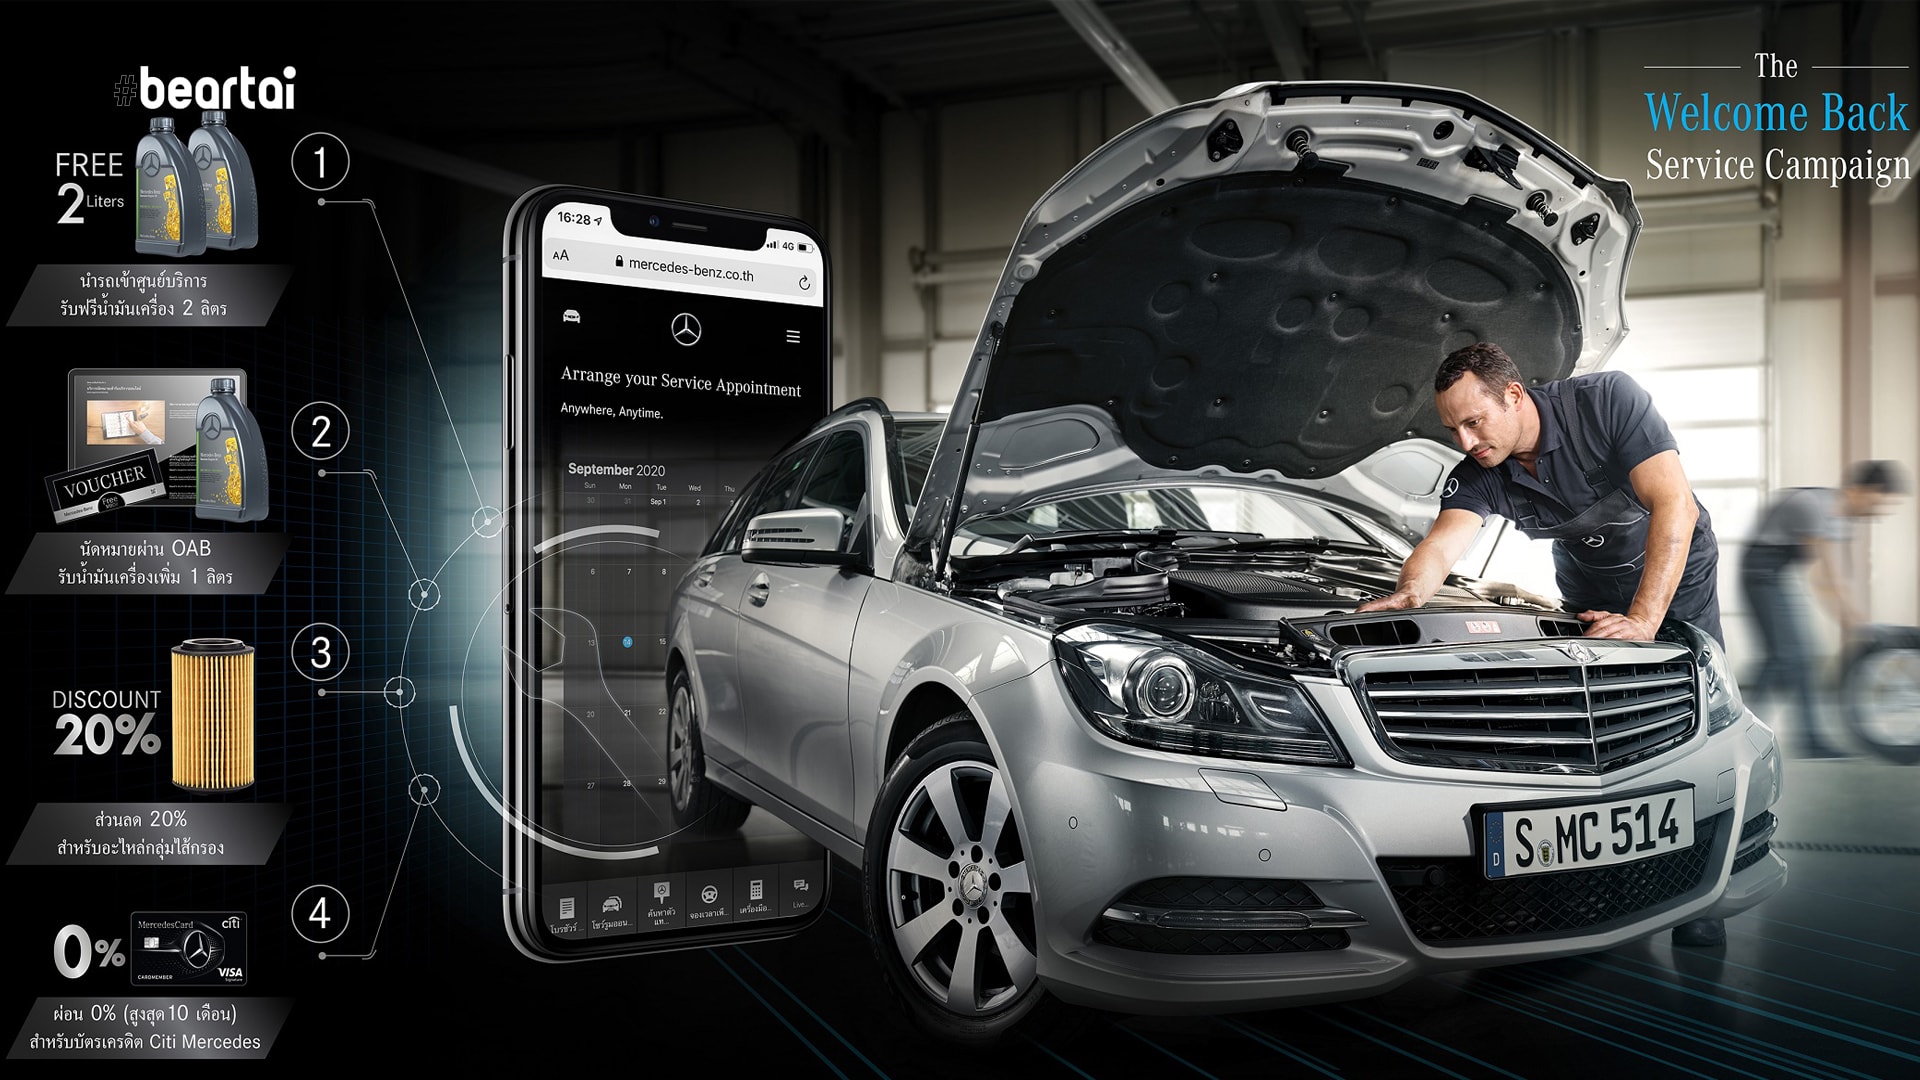 Mercedes benz ส่ง “Welcome Back Service Campaign” ชวนลูกค้ารับข้อเสนอพิเศษ  สำหรับบริการบำรุงรักษา